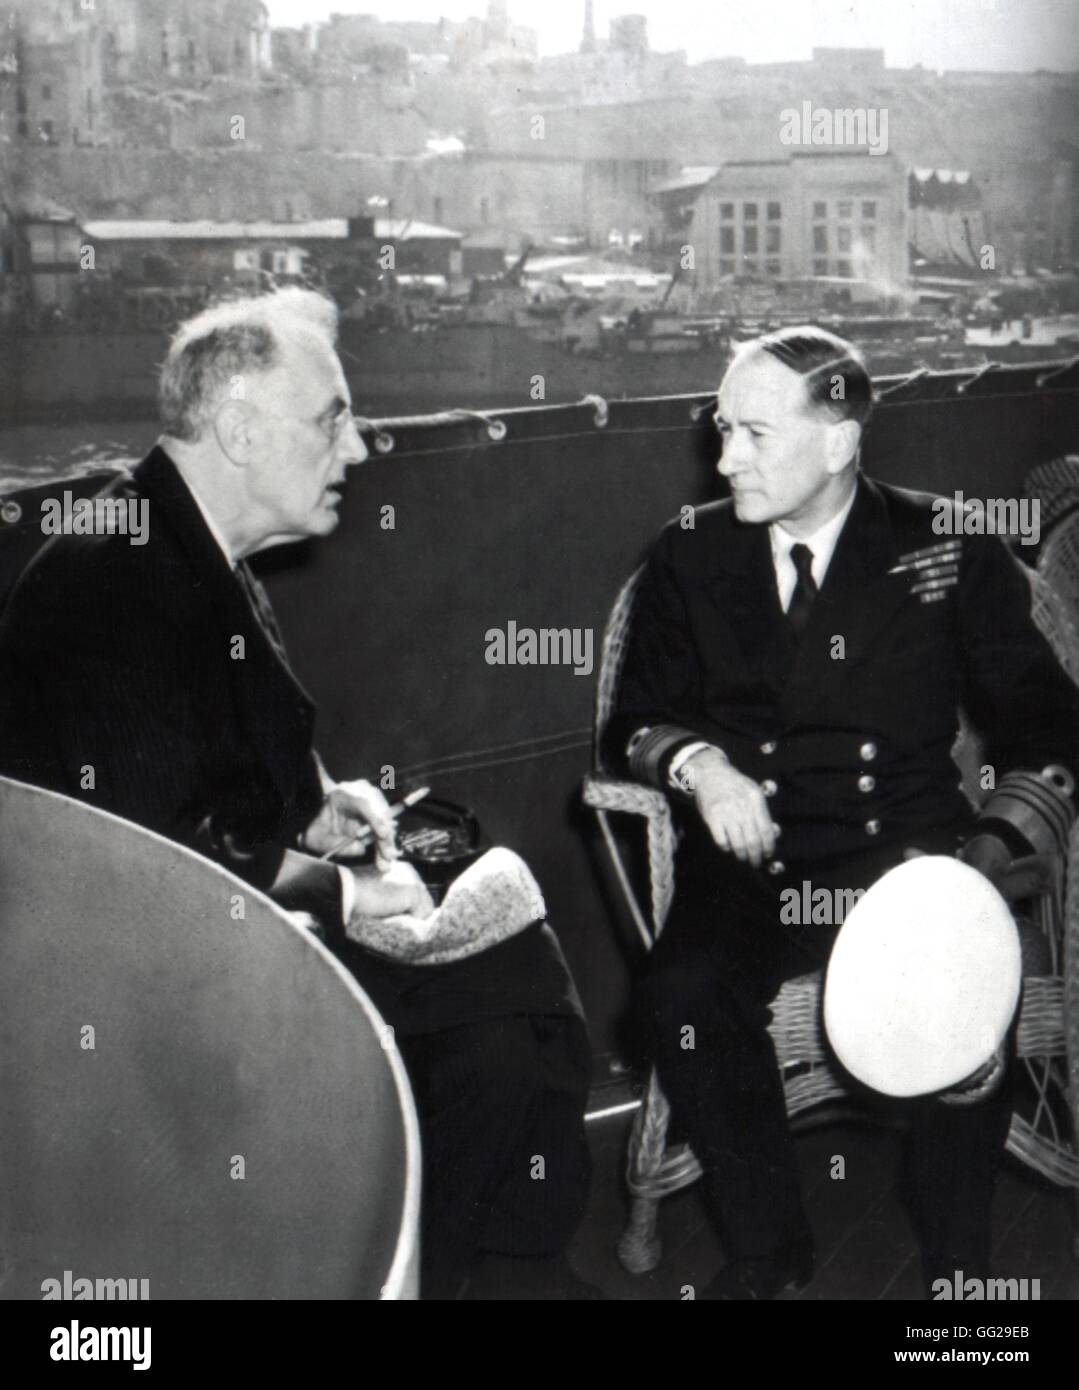 Conferencia de Yalta (Crimea). Roosevelt y Sir Andrew Cunningham rumbo a Yalta. Febrero de 1945 La II Guerra Mundial la foto del Ejército de EE.UU. Foto de stock